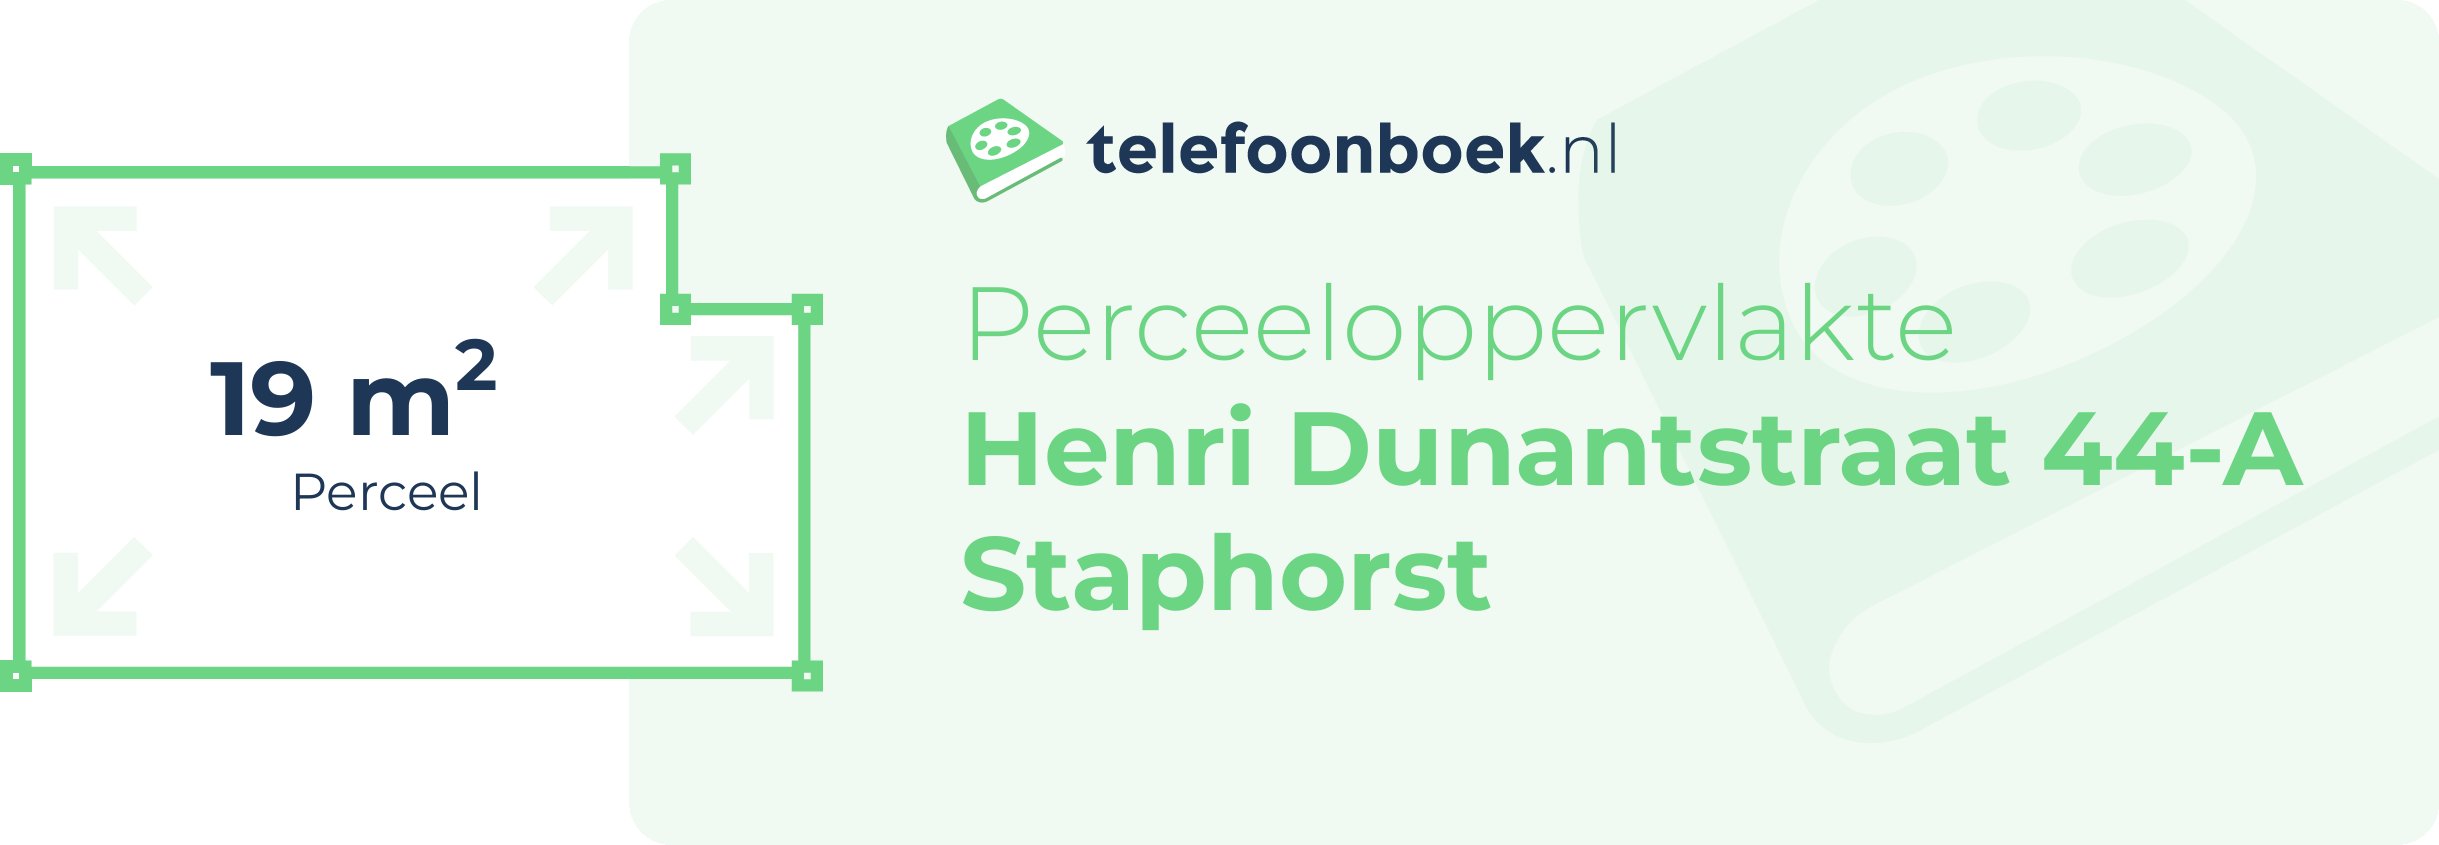 Perceeloppervlakte Henri Dunantstraat 44-A Staphorst